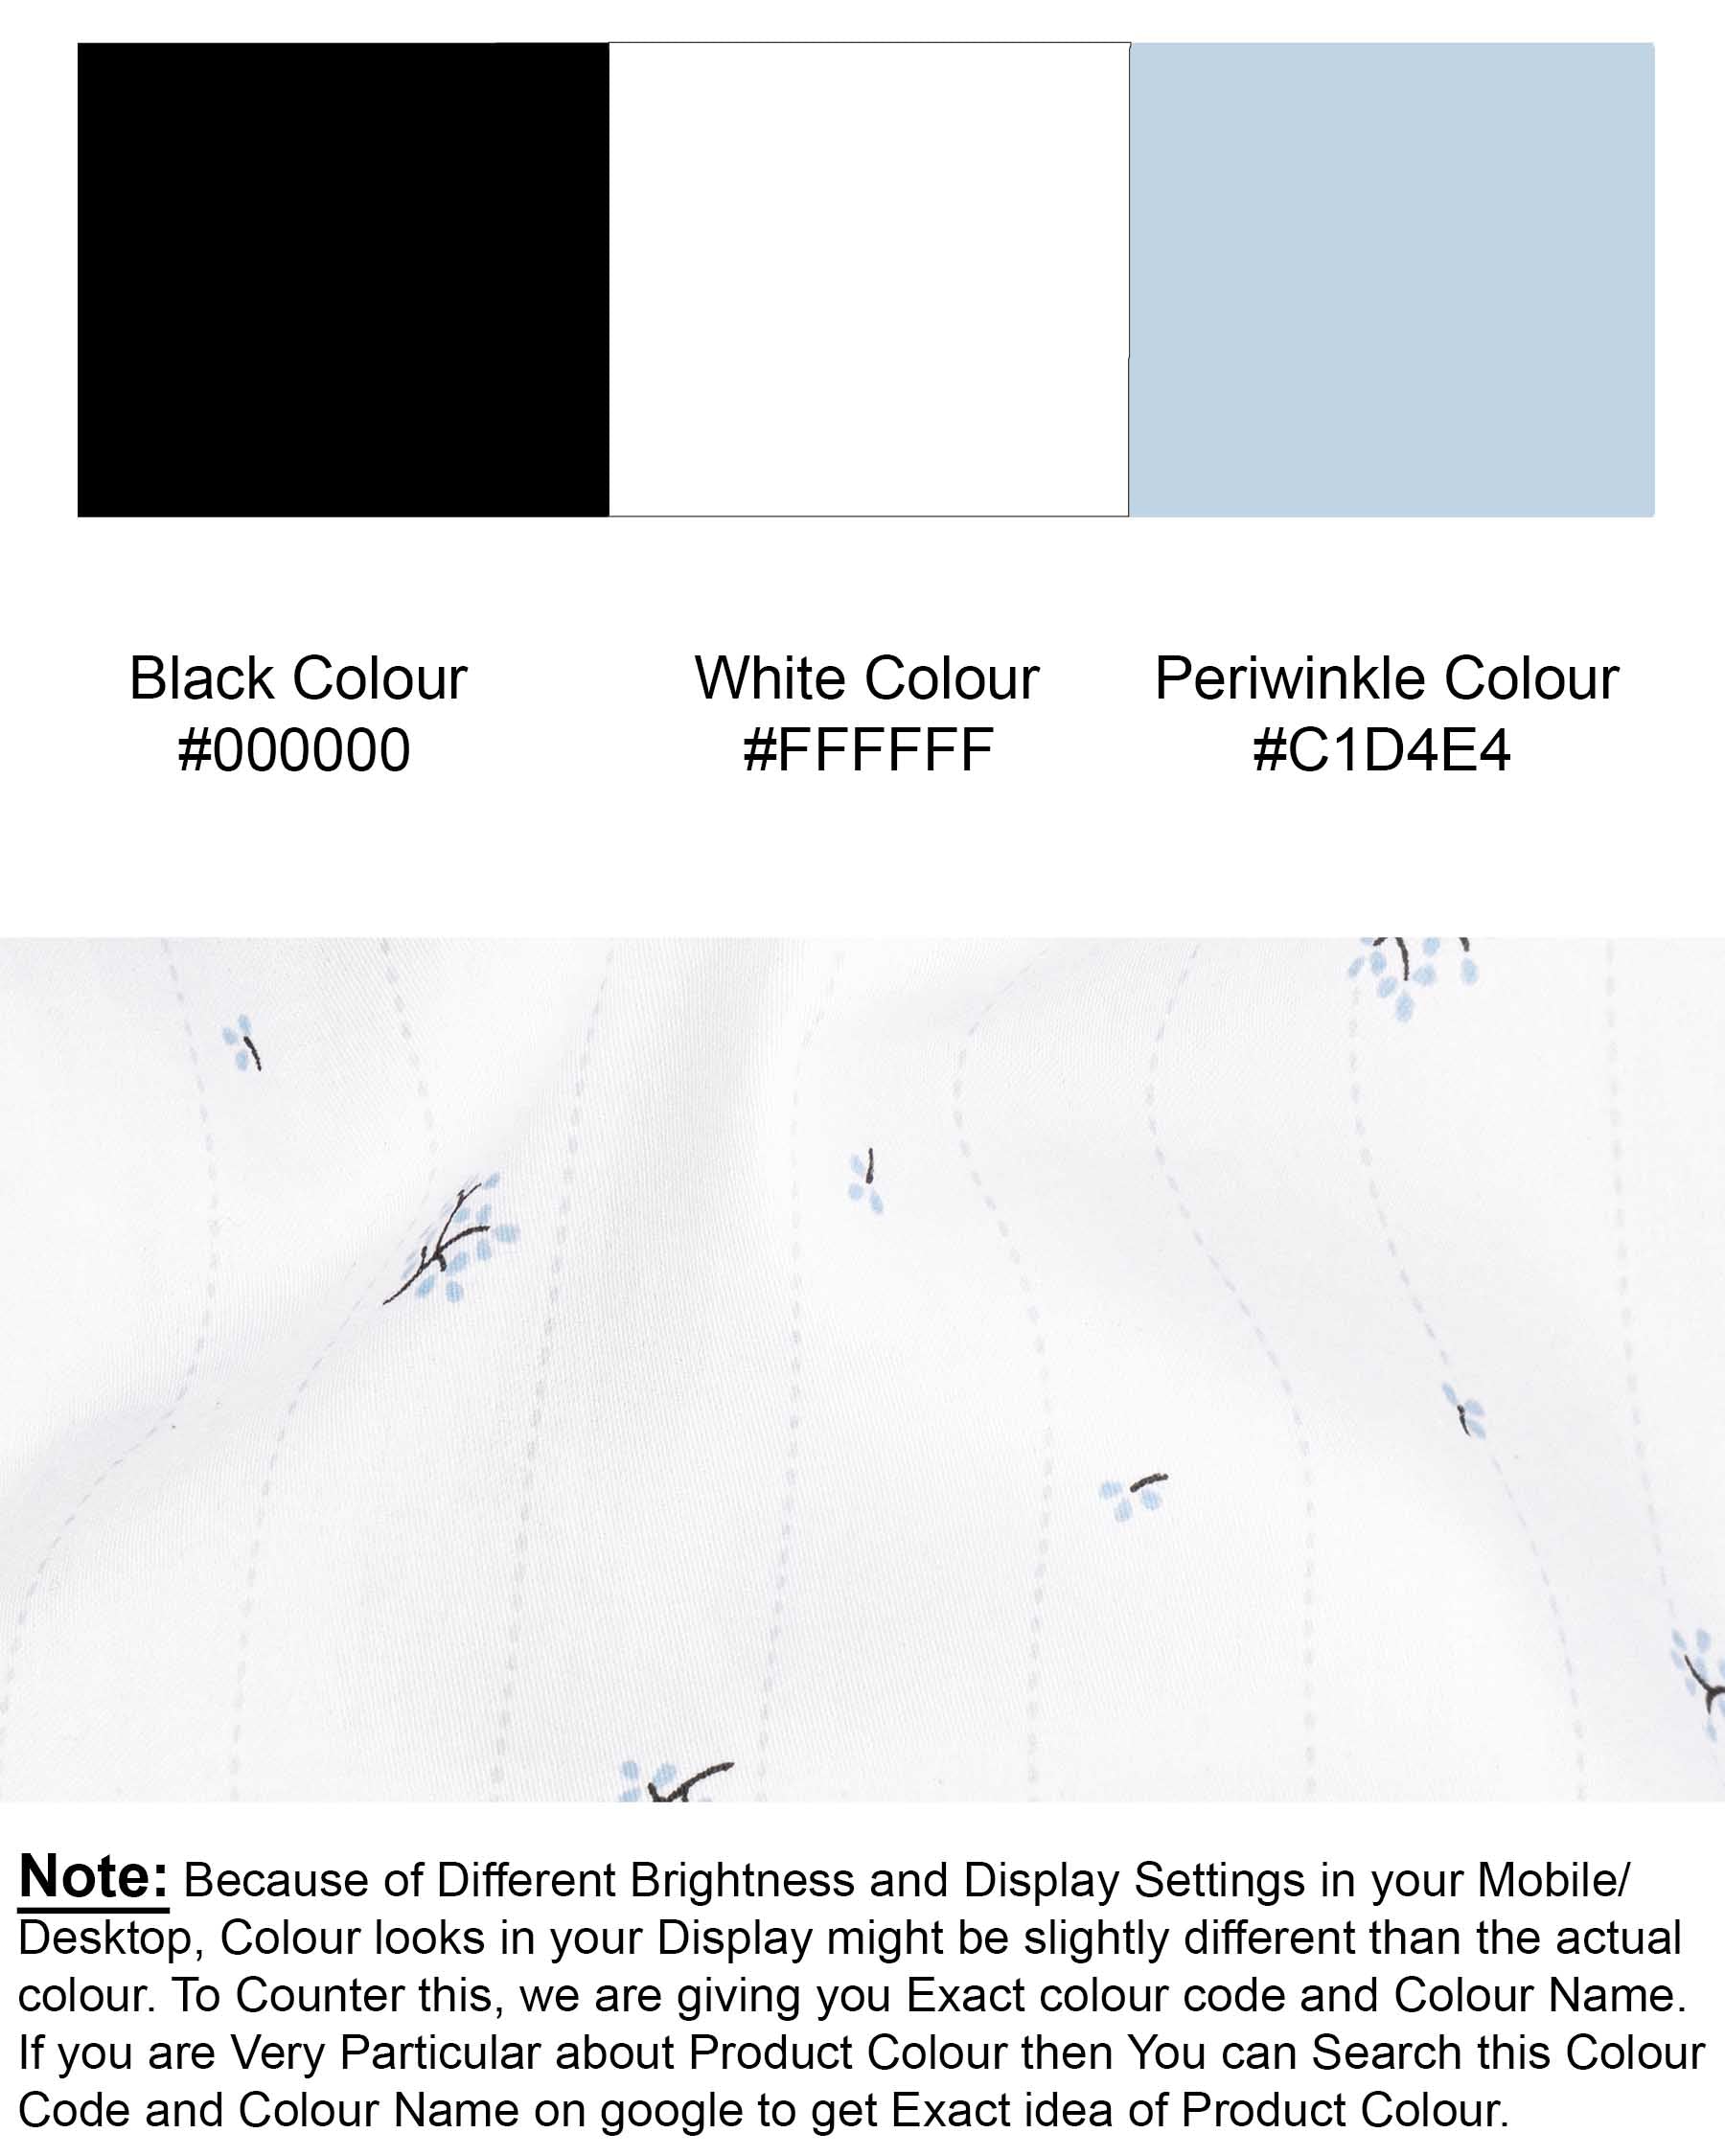 Bright White Striped and Printed Super Soft Premium Cotton Shirt 6442-BLK-38, 6442-BLK-H-38, 6442-BLK-39, 6442-BLK-H-39, 6442-BLK-40, 6442-BLK-H-40, 6442-BLK-42, 6442-BLK-H-42, 6442-BLK-44, 6442-BLK-H-44, 6442-BLK-46, 6442-BLK-H-46, 6442-BLK-48, 6442-BLK-H-48, 6442-BLK-50, 6442-BLK-H-50, 6442-BLK-52, 6442-BLK-H-52